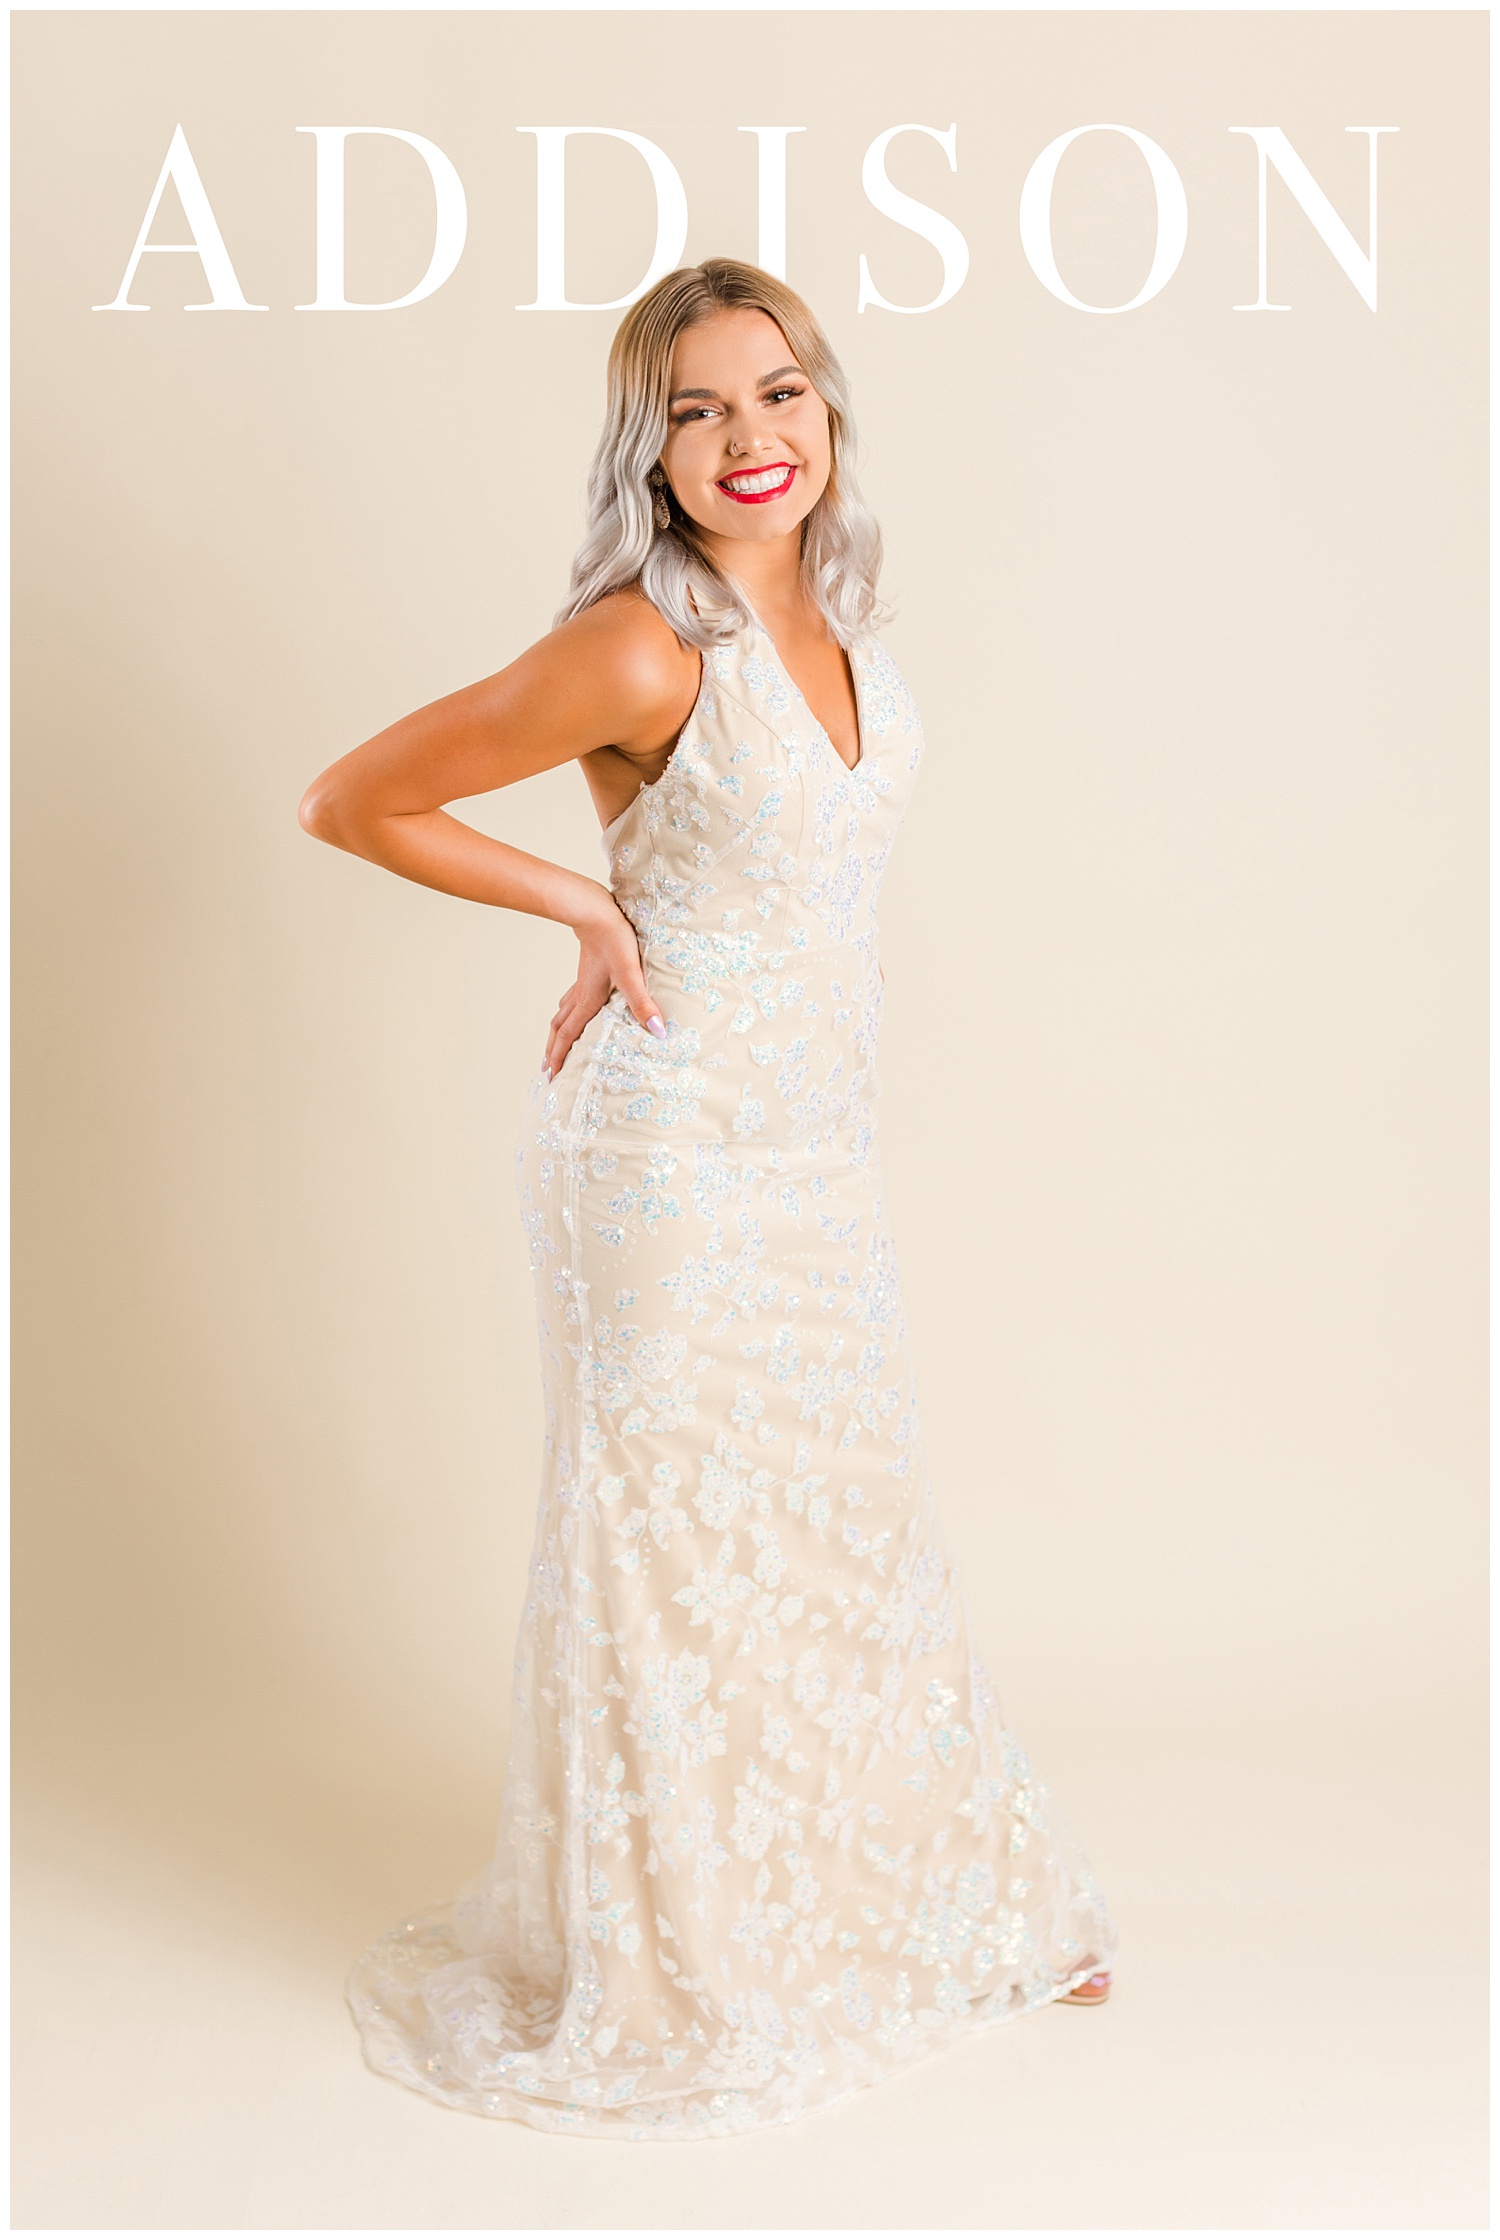 Addison poses in a Colette prom dress for a magazine cover | CB Studio